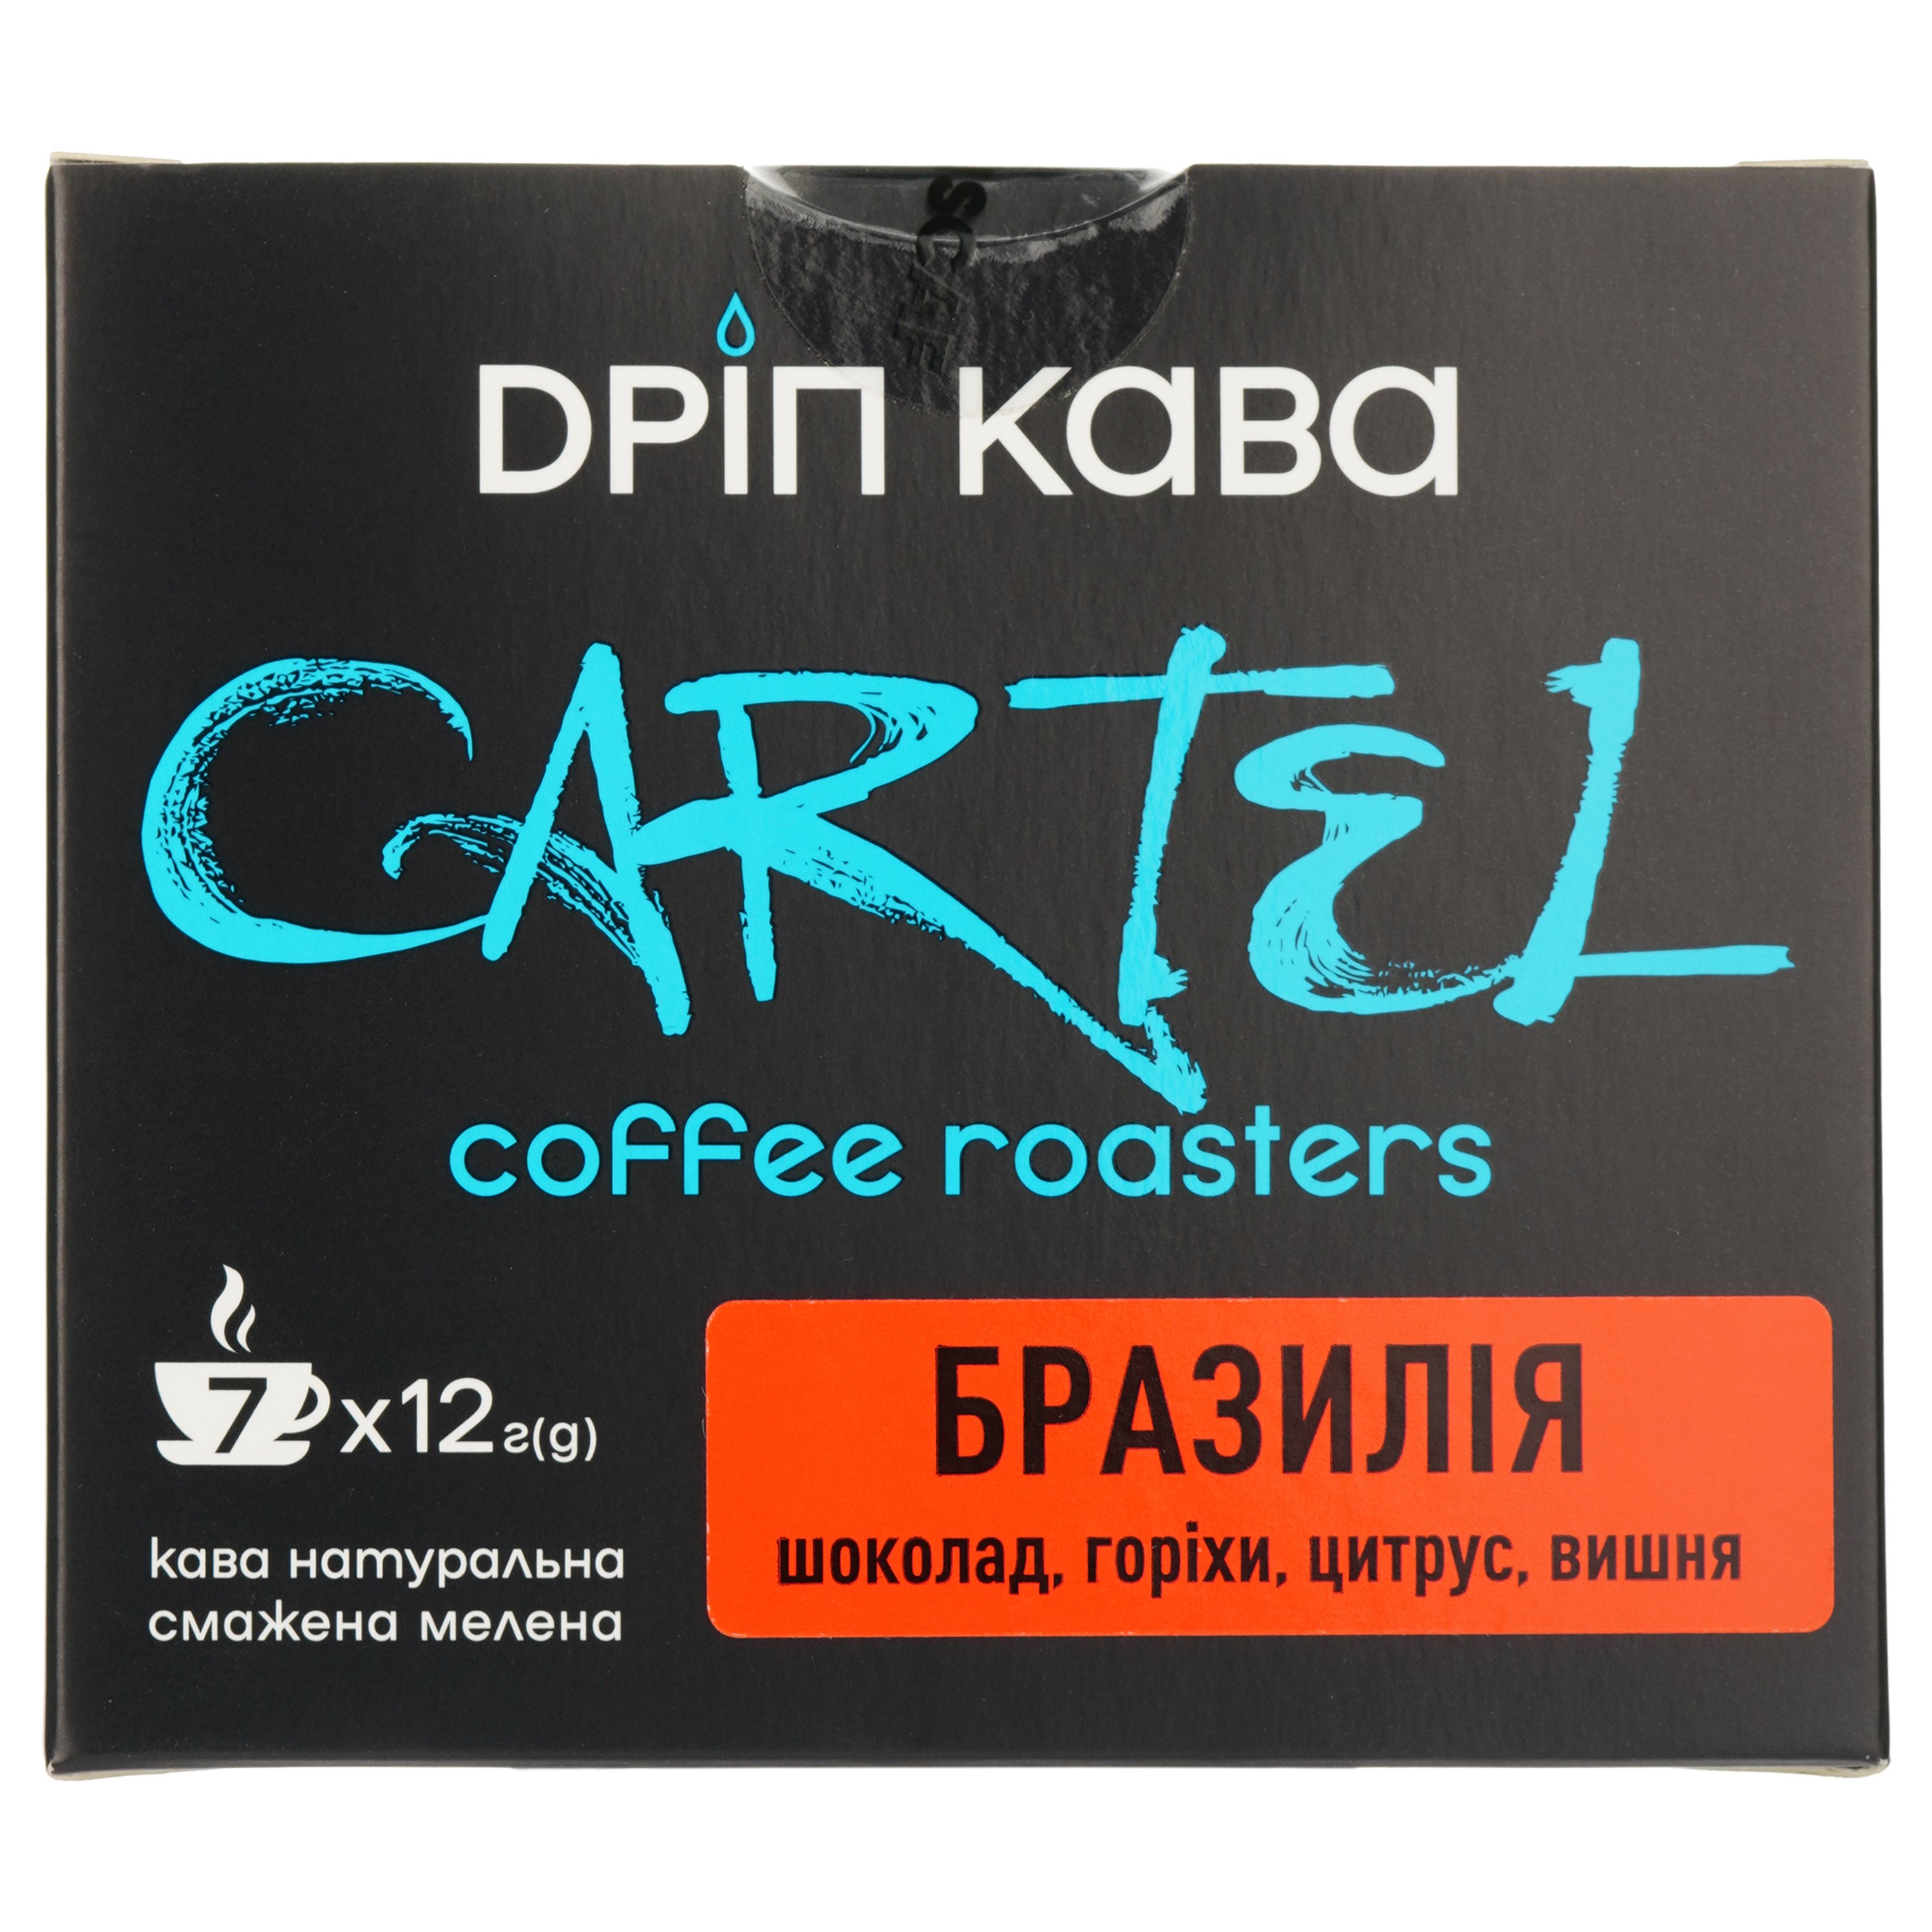 Дрип-кофе Cartel Бразилия 84 г (7 шт. по 12 г) - фото 2